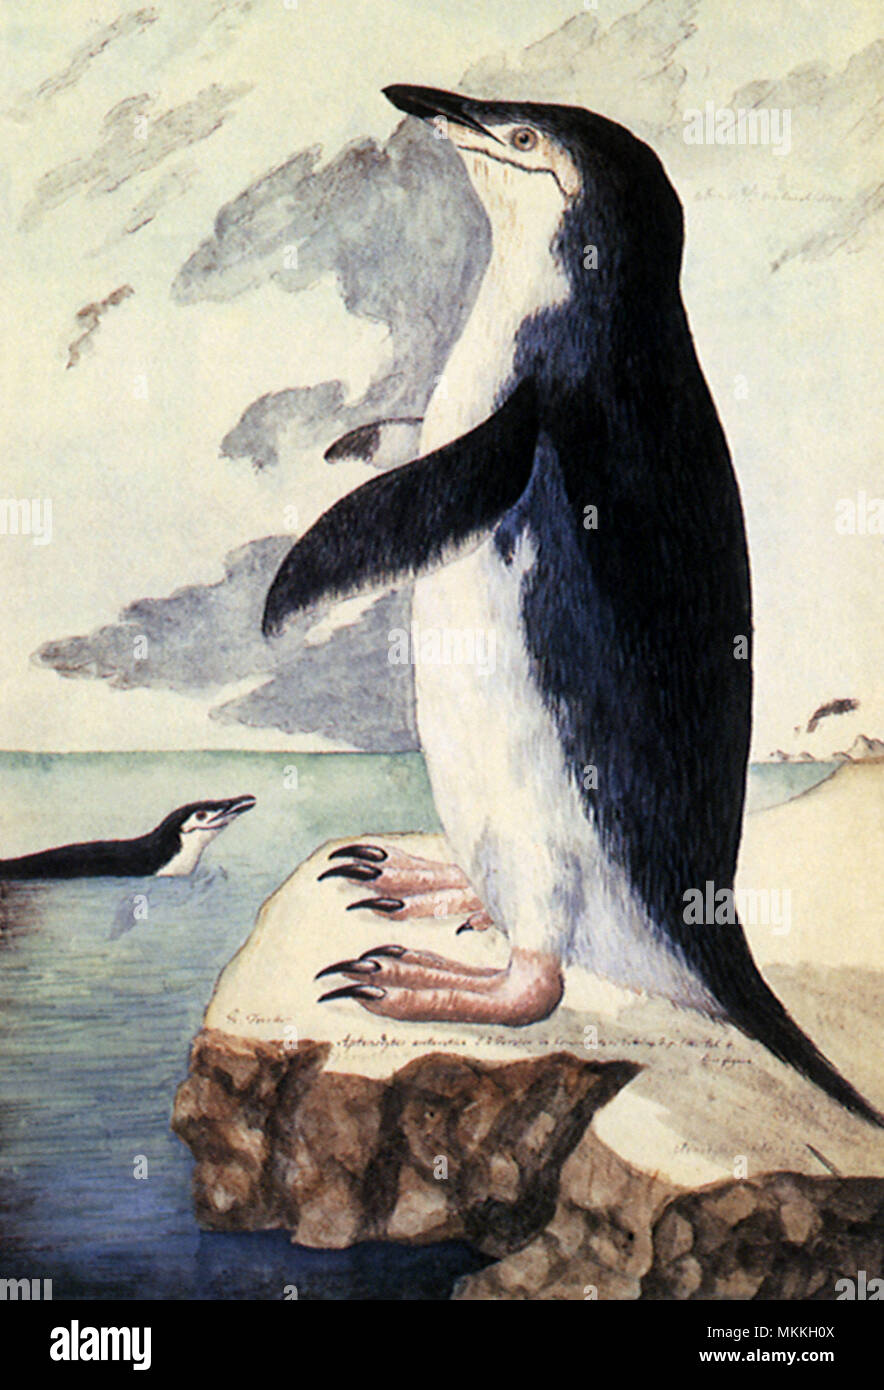 Chinstrap or Bearded Penguin, Pygoscelis antarctica Stock Photo